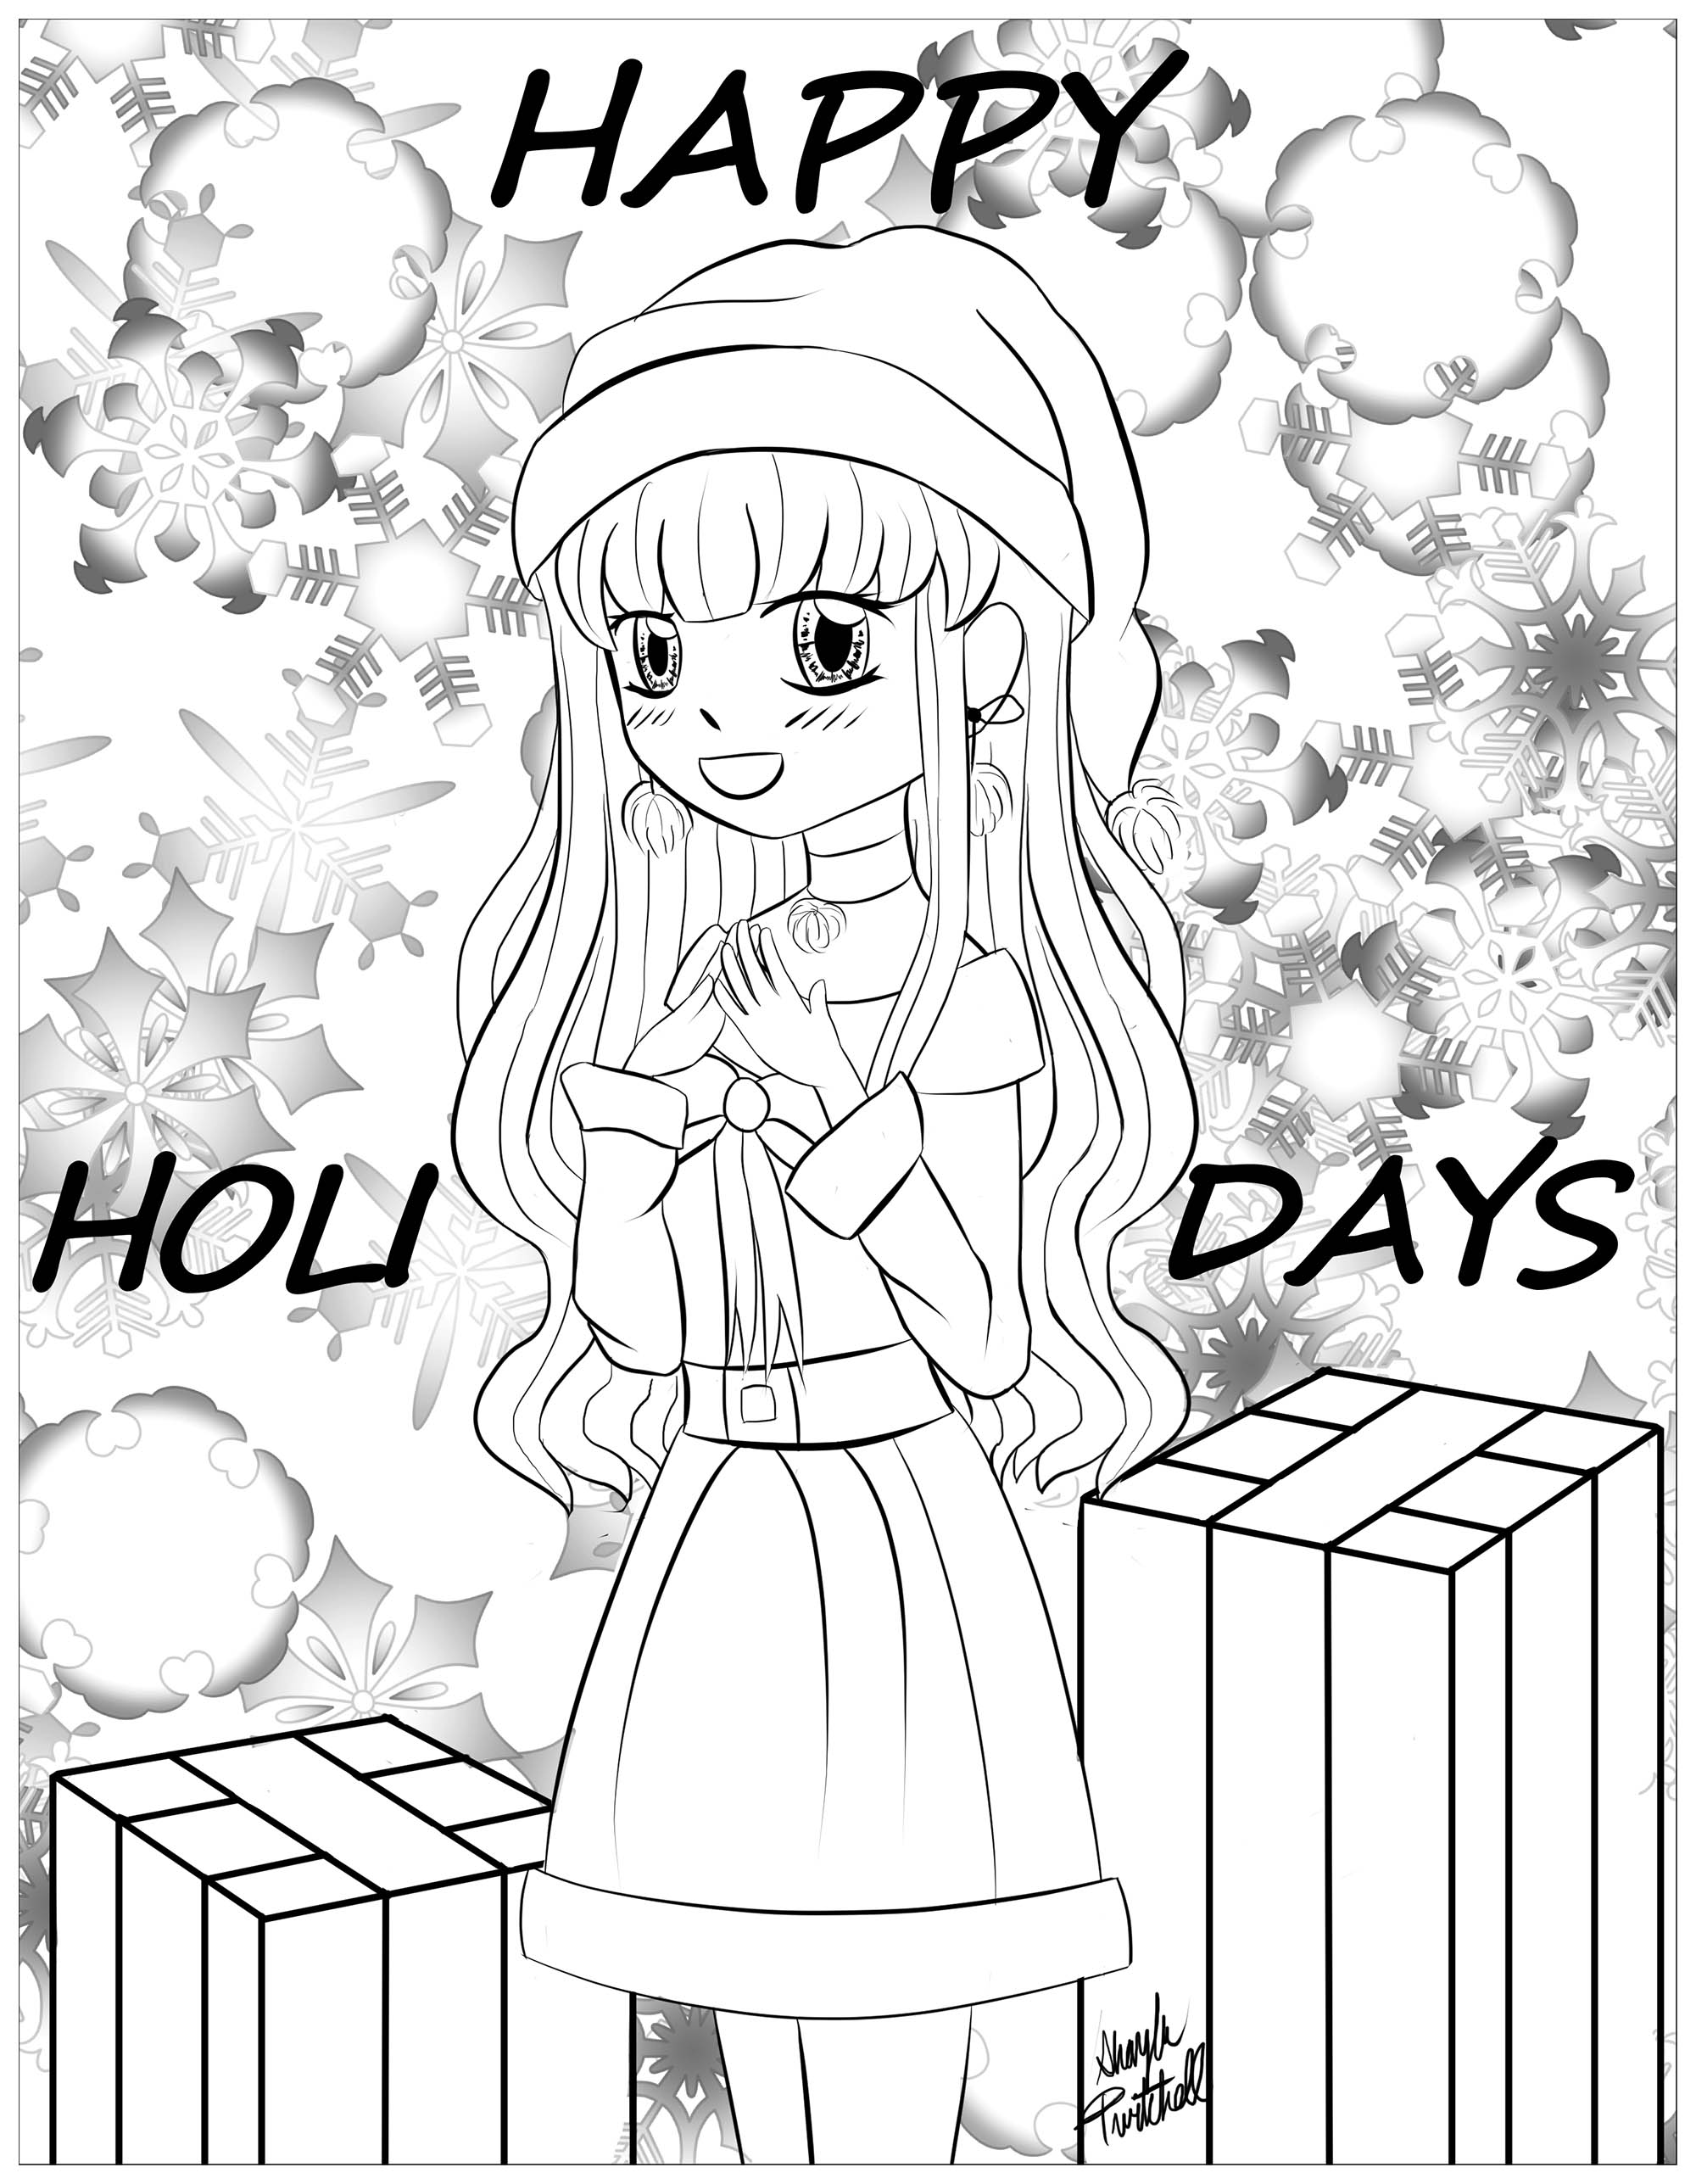 Christmas girl, Manga style coloring page, Artist : Shayla Twitchell